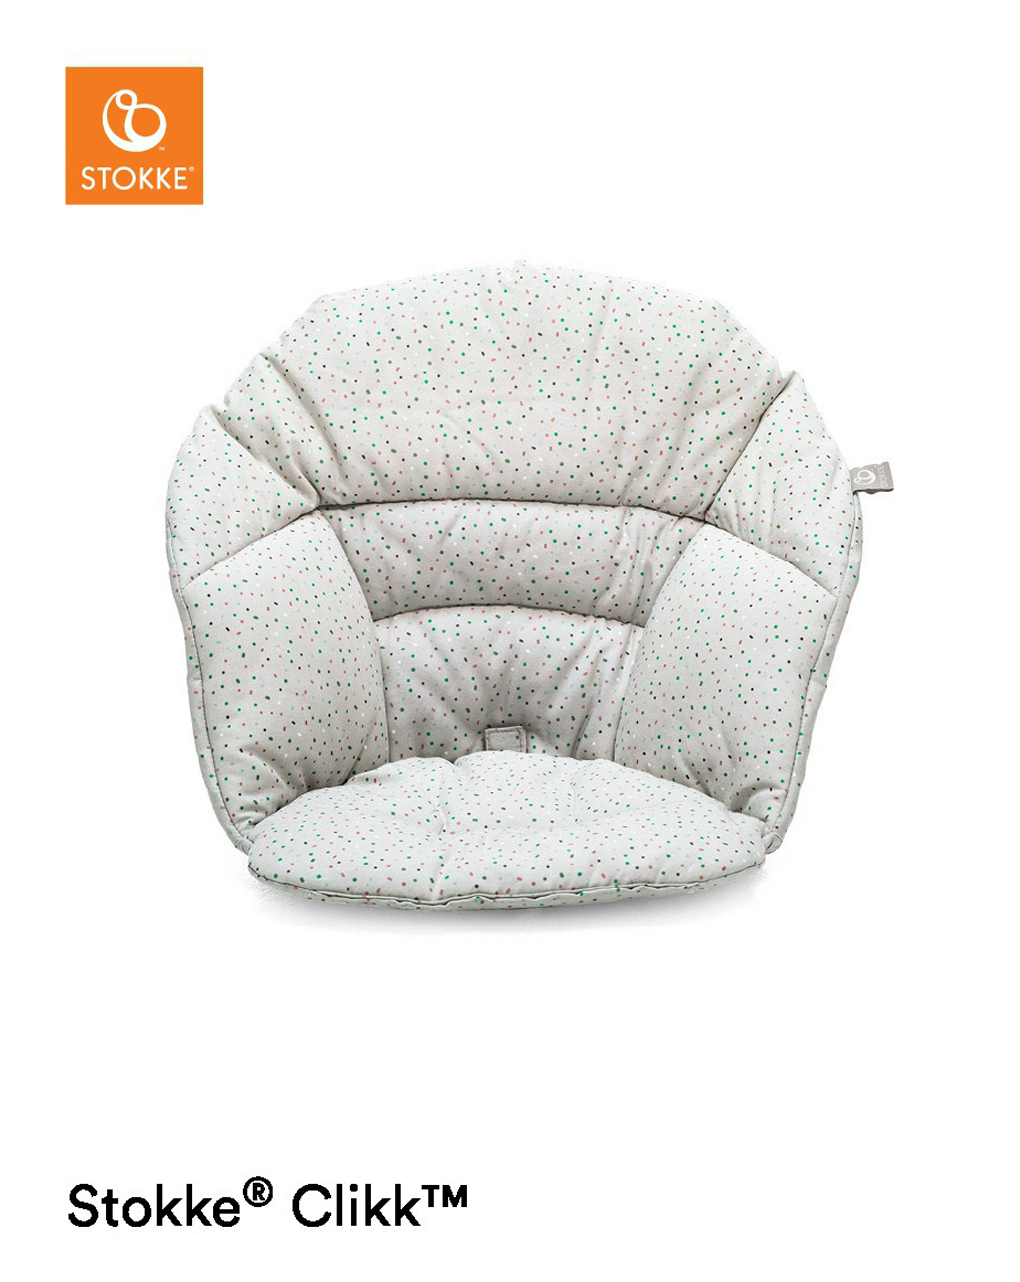 Stokke® clikk™ cushion - grey sprinkles - Stokke